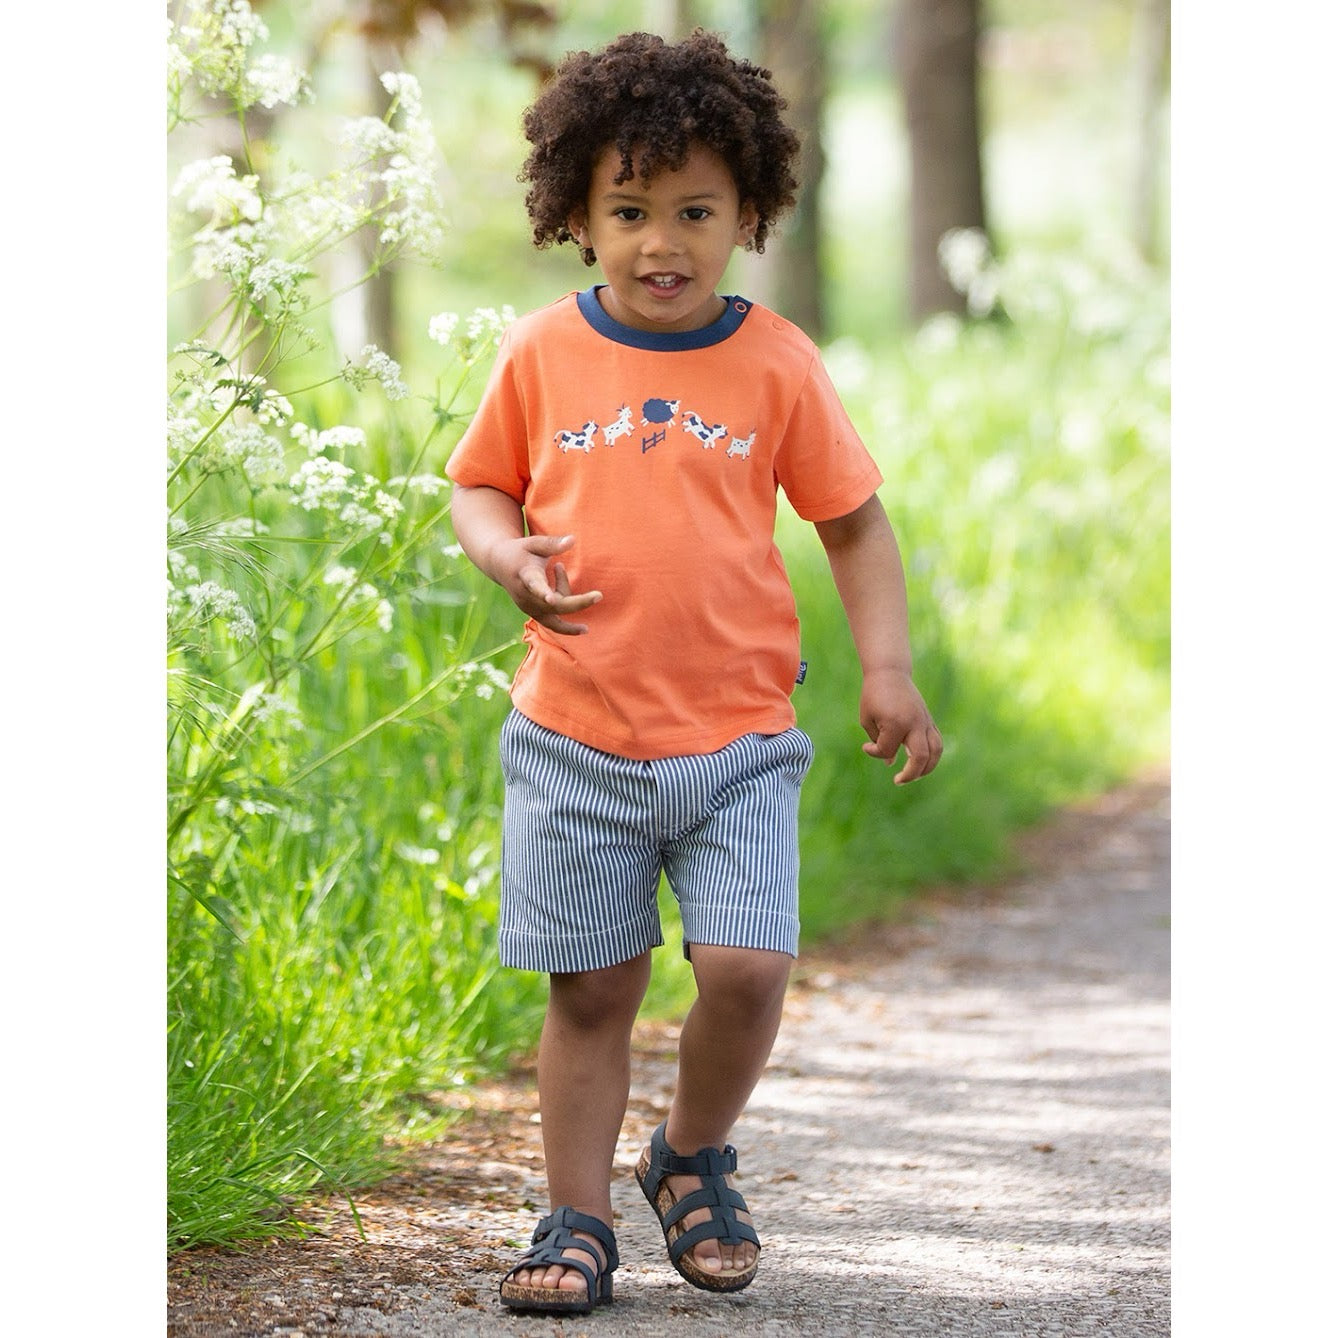 Kite Farm Fun Infant T-Shirt 41-9894 Clothing 3YRS / Orange,4YRS / Orange,5YRS / Orange